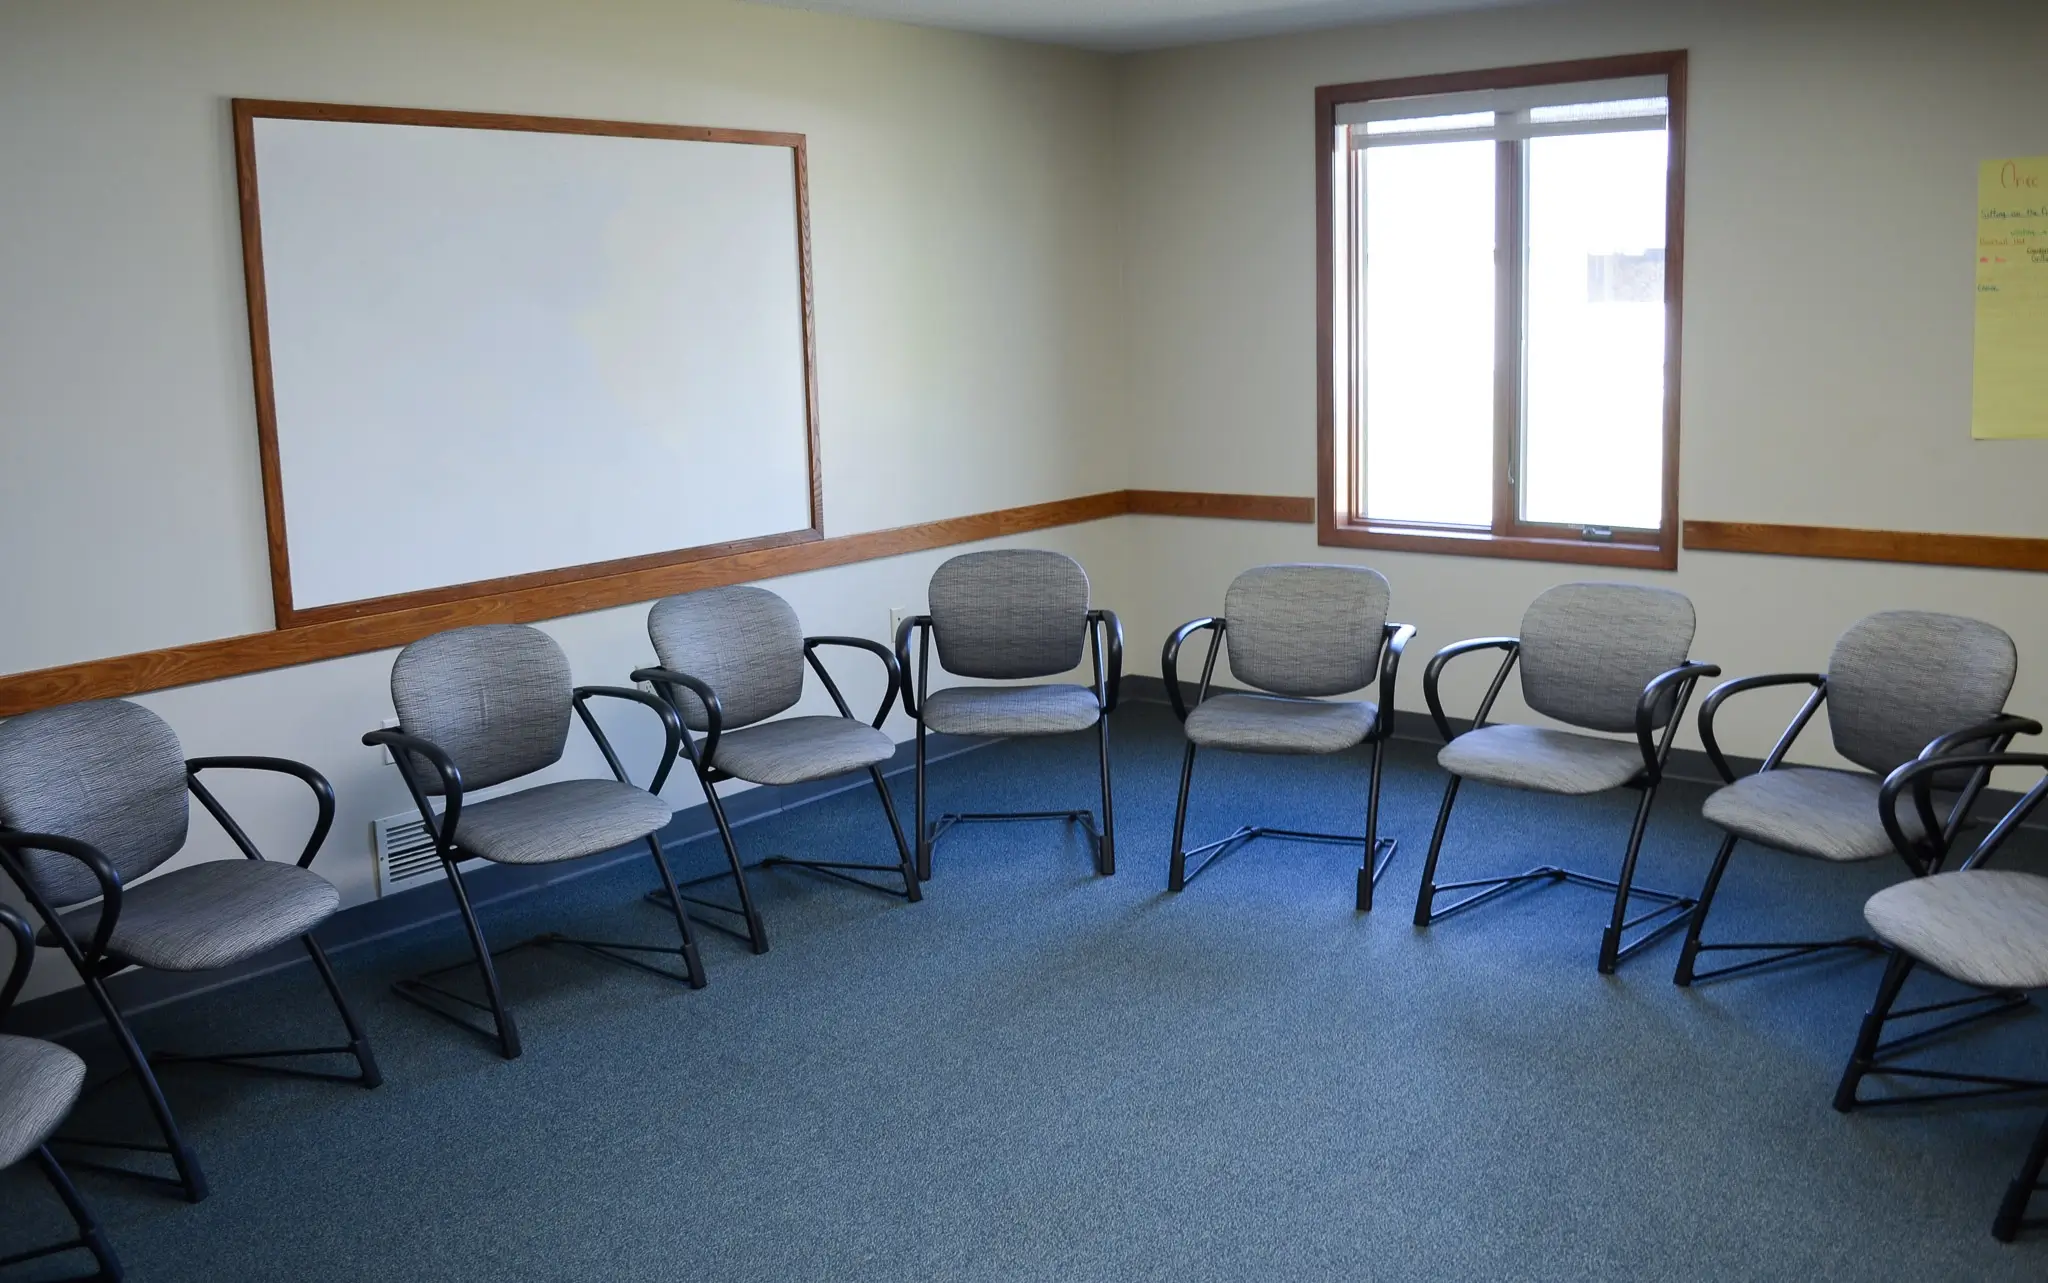 Meeting room chairs whiteboard